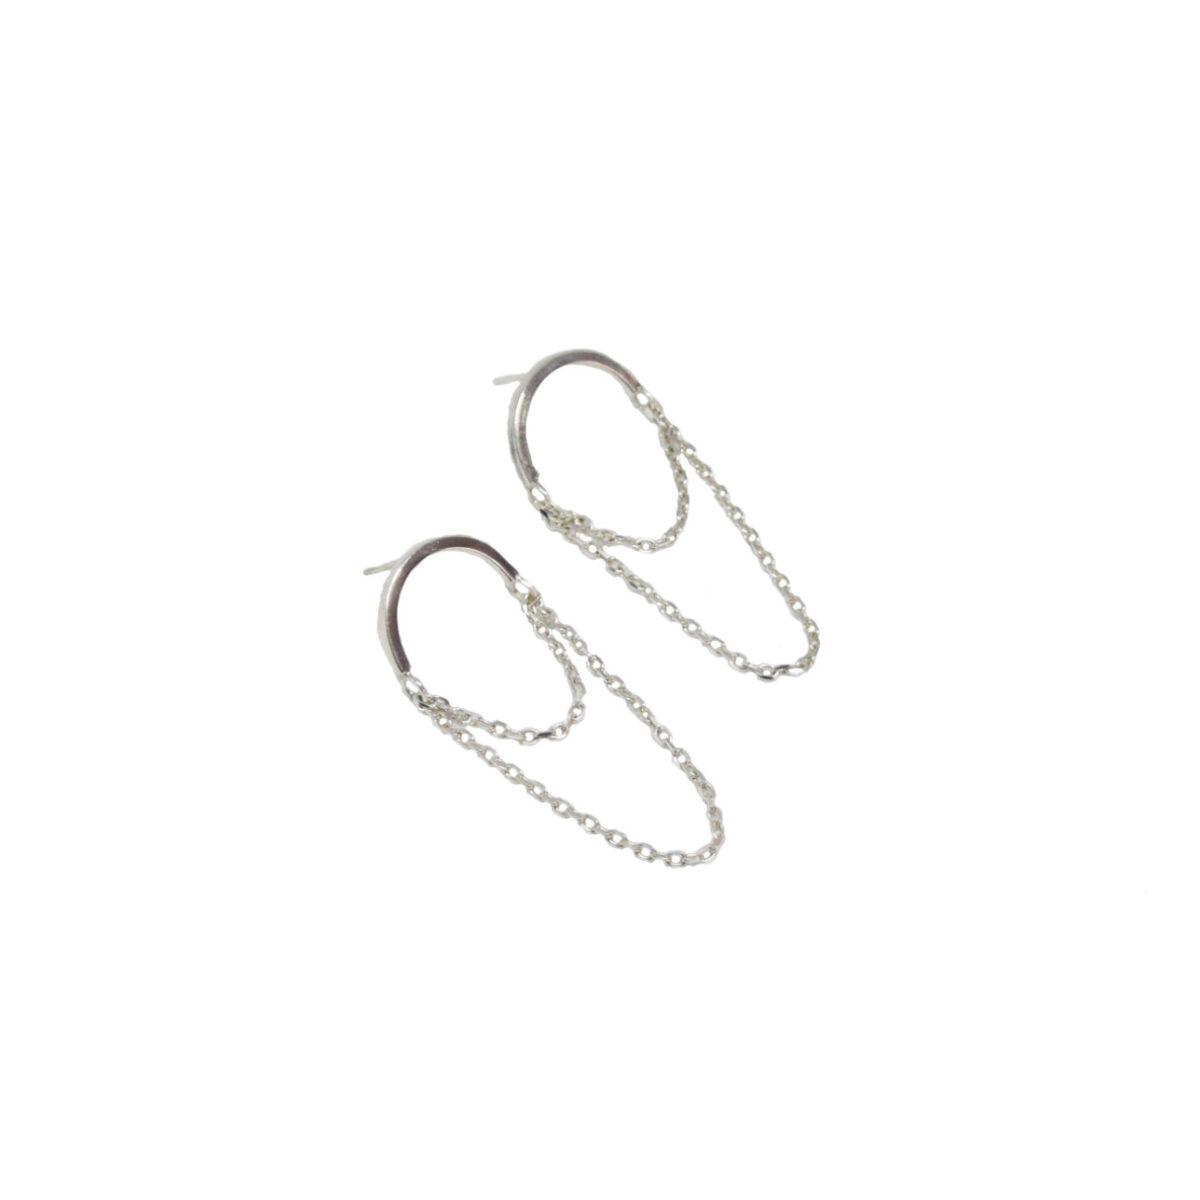 “Cupola” σκουλαρίκια ασημένια “Cupola” σκουλαρίκια ασημένια “Cupola” σκουλαρίκια ασημένια 5